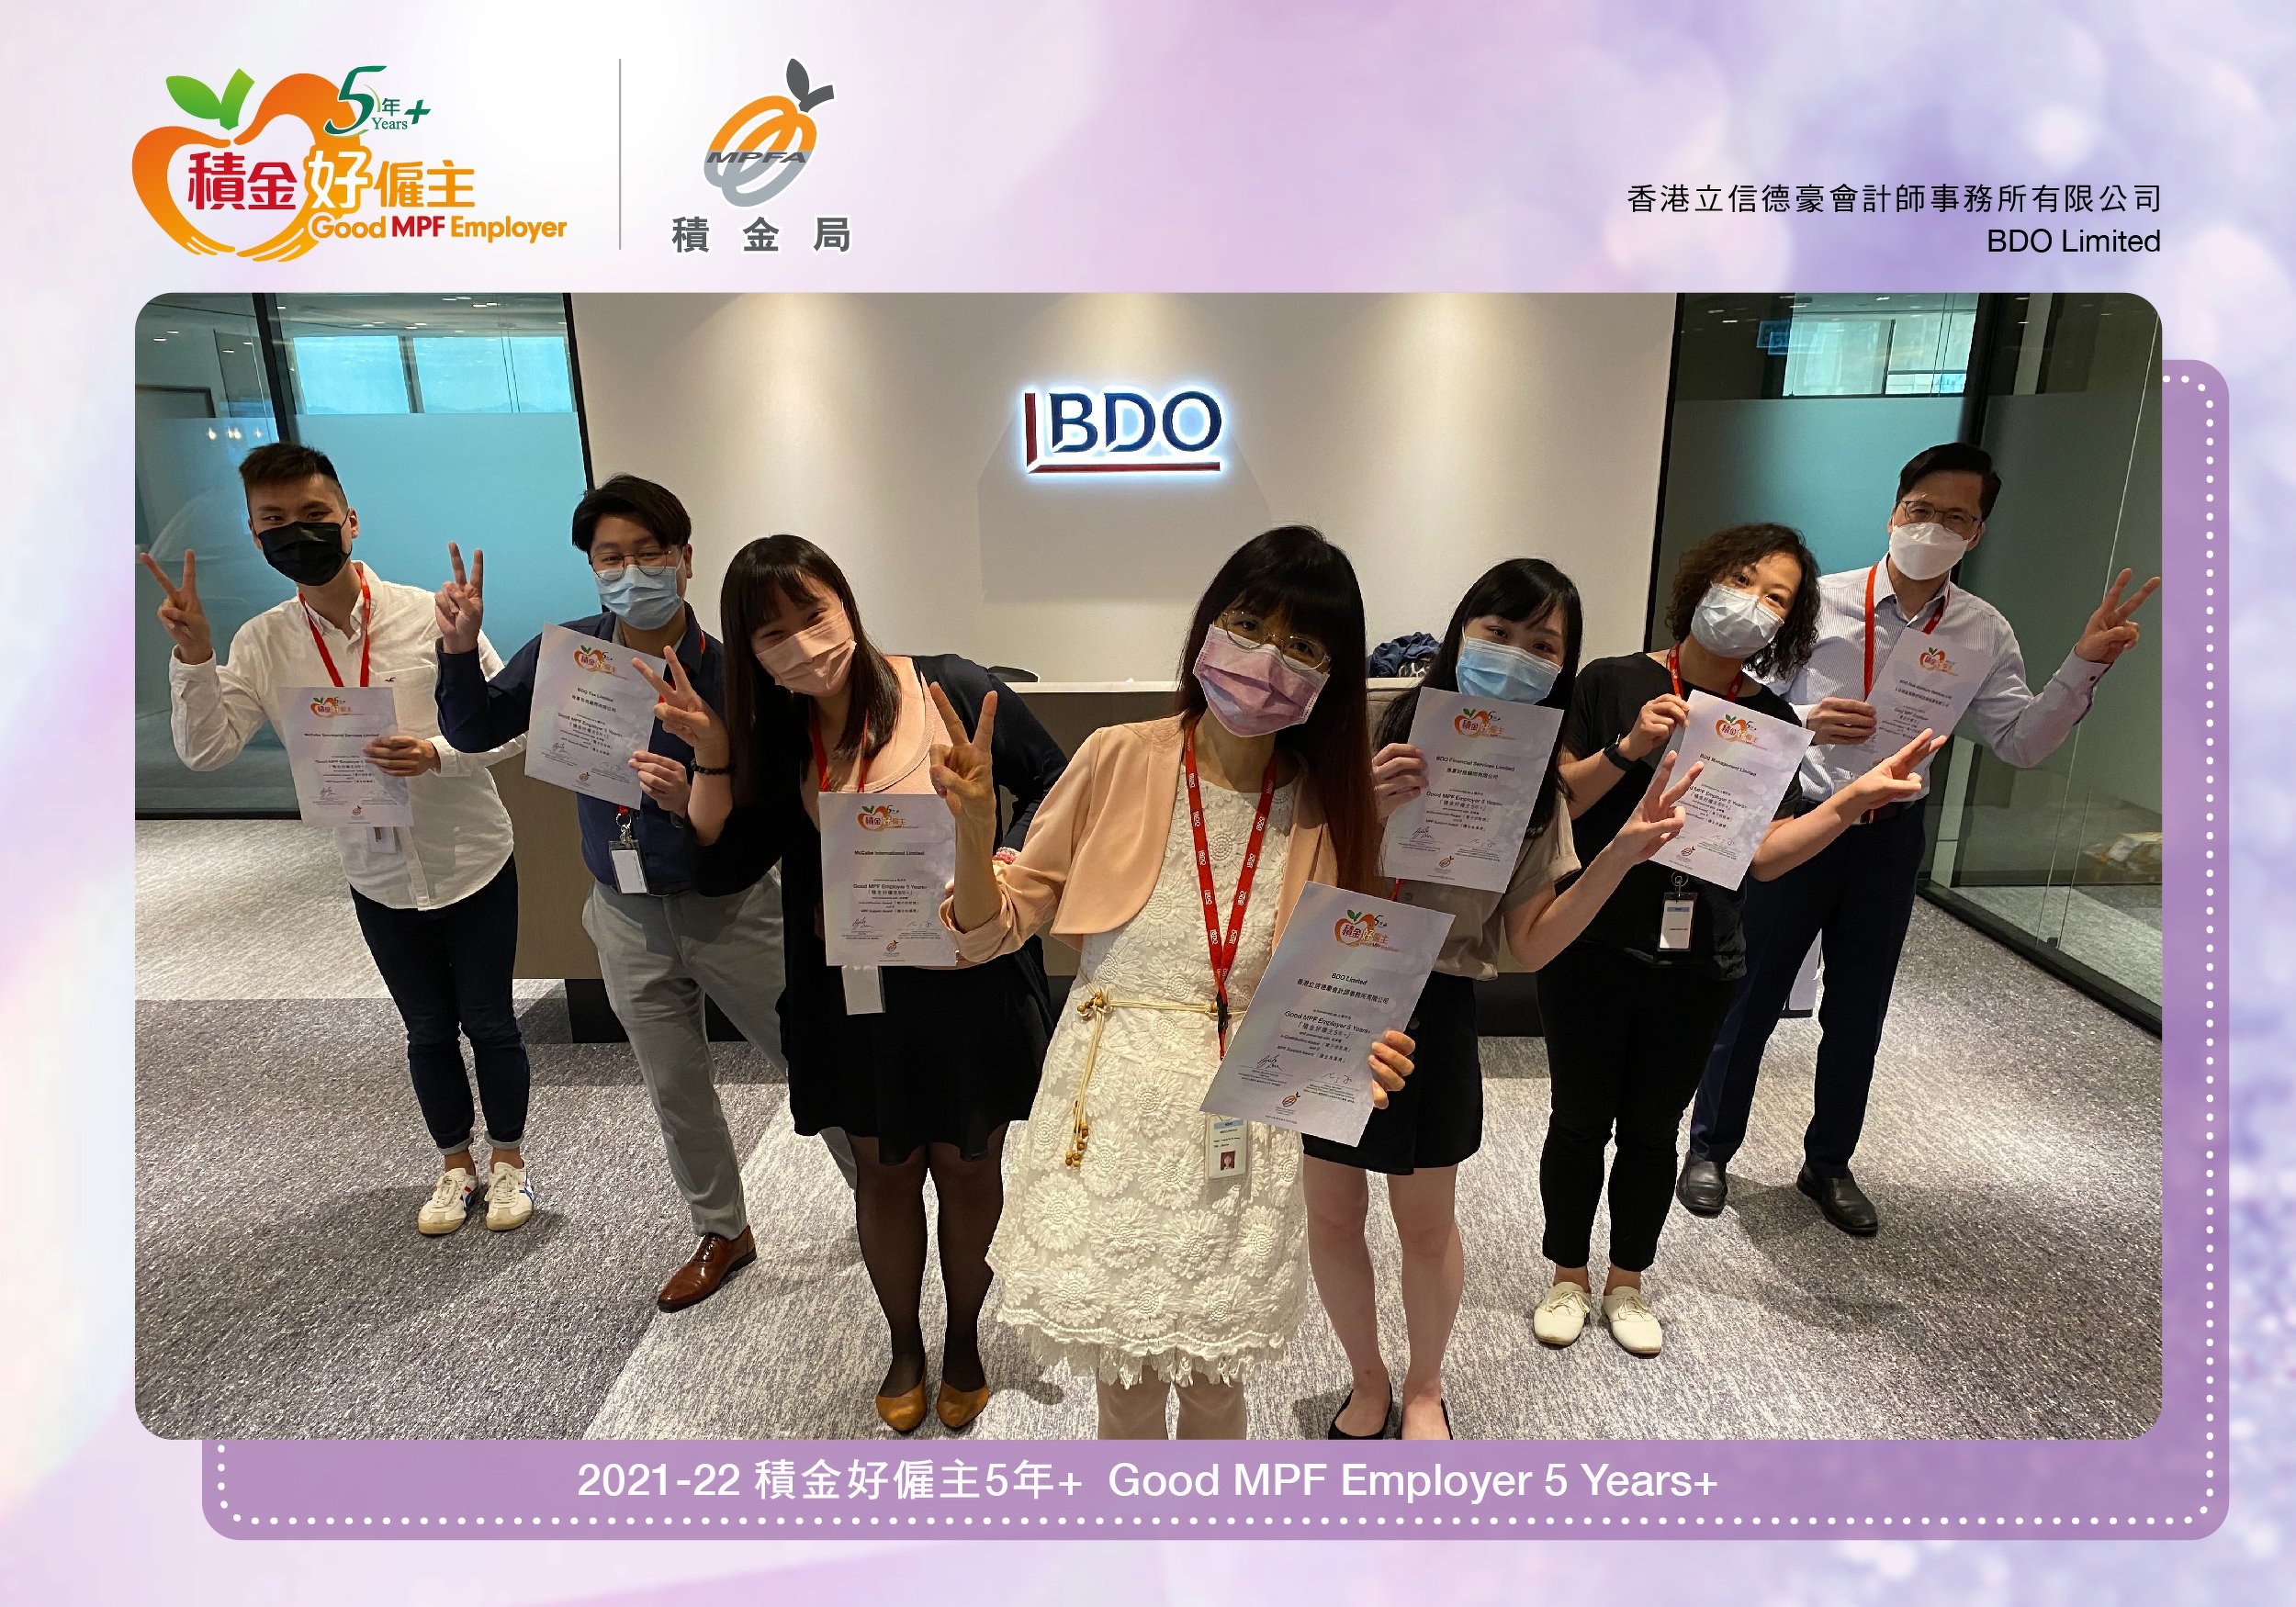 BDO Limited 香港立信德豪會計師事務所有限公司